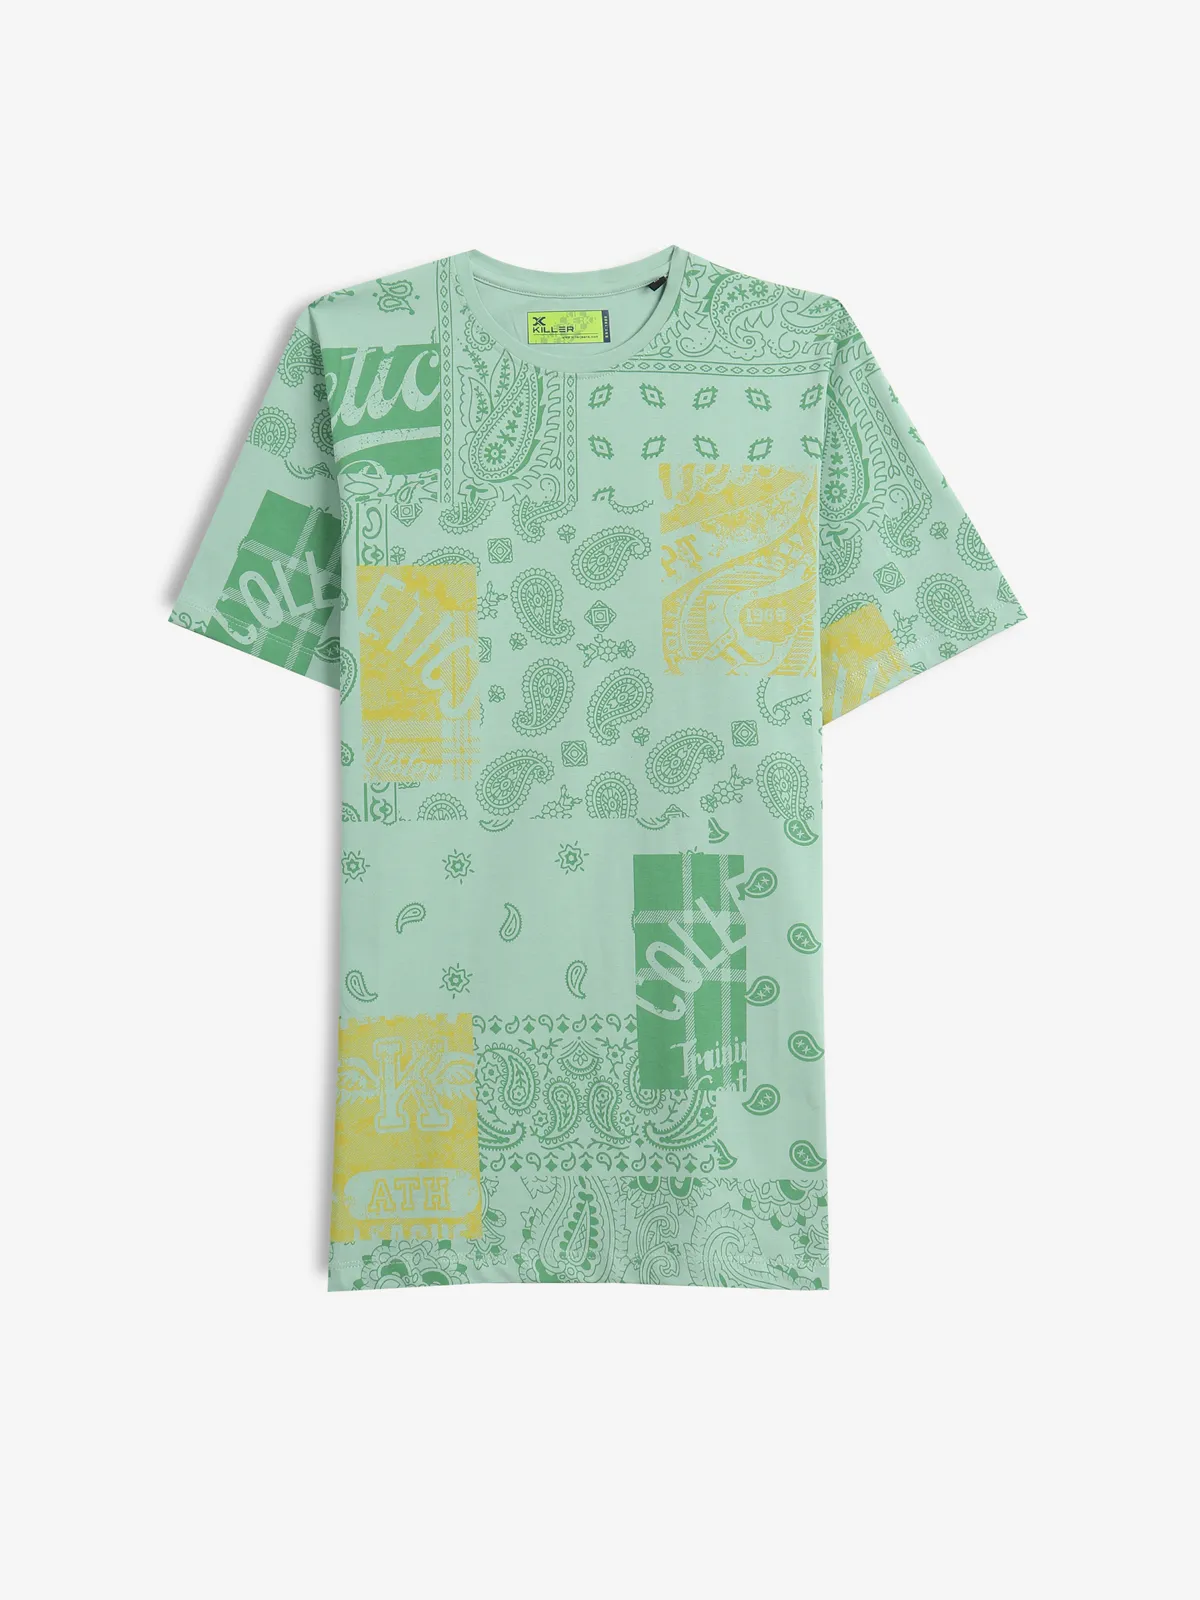 KILLER pista green printed cotton casual t-shirt